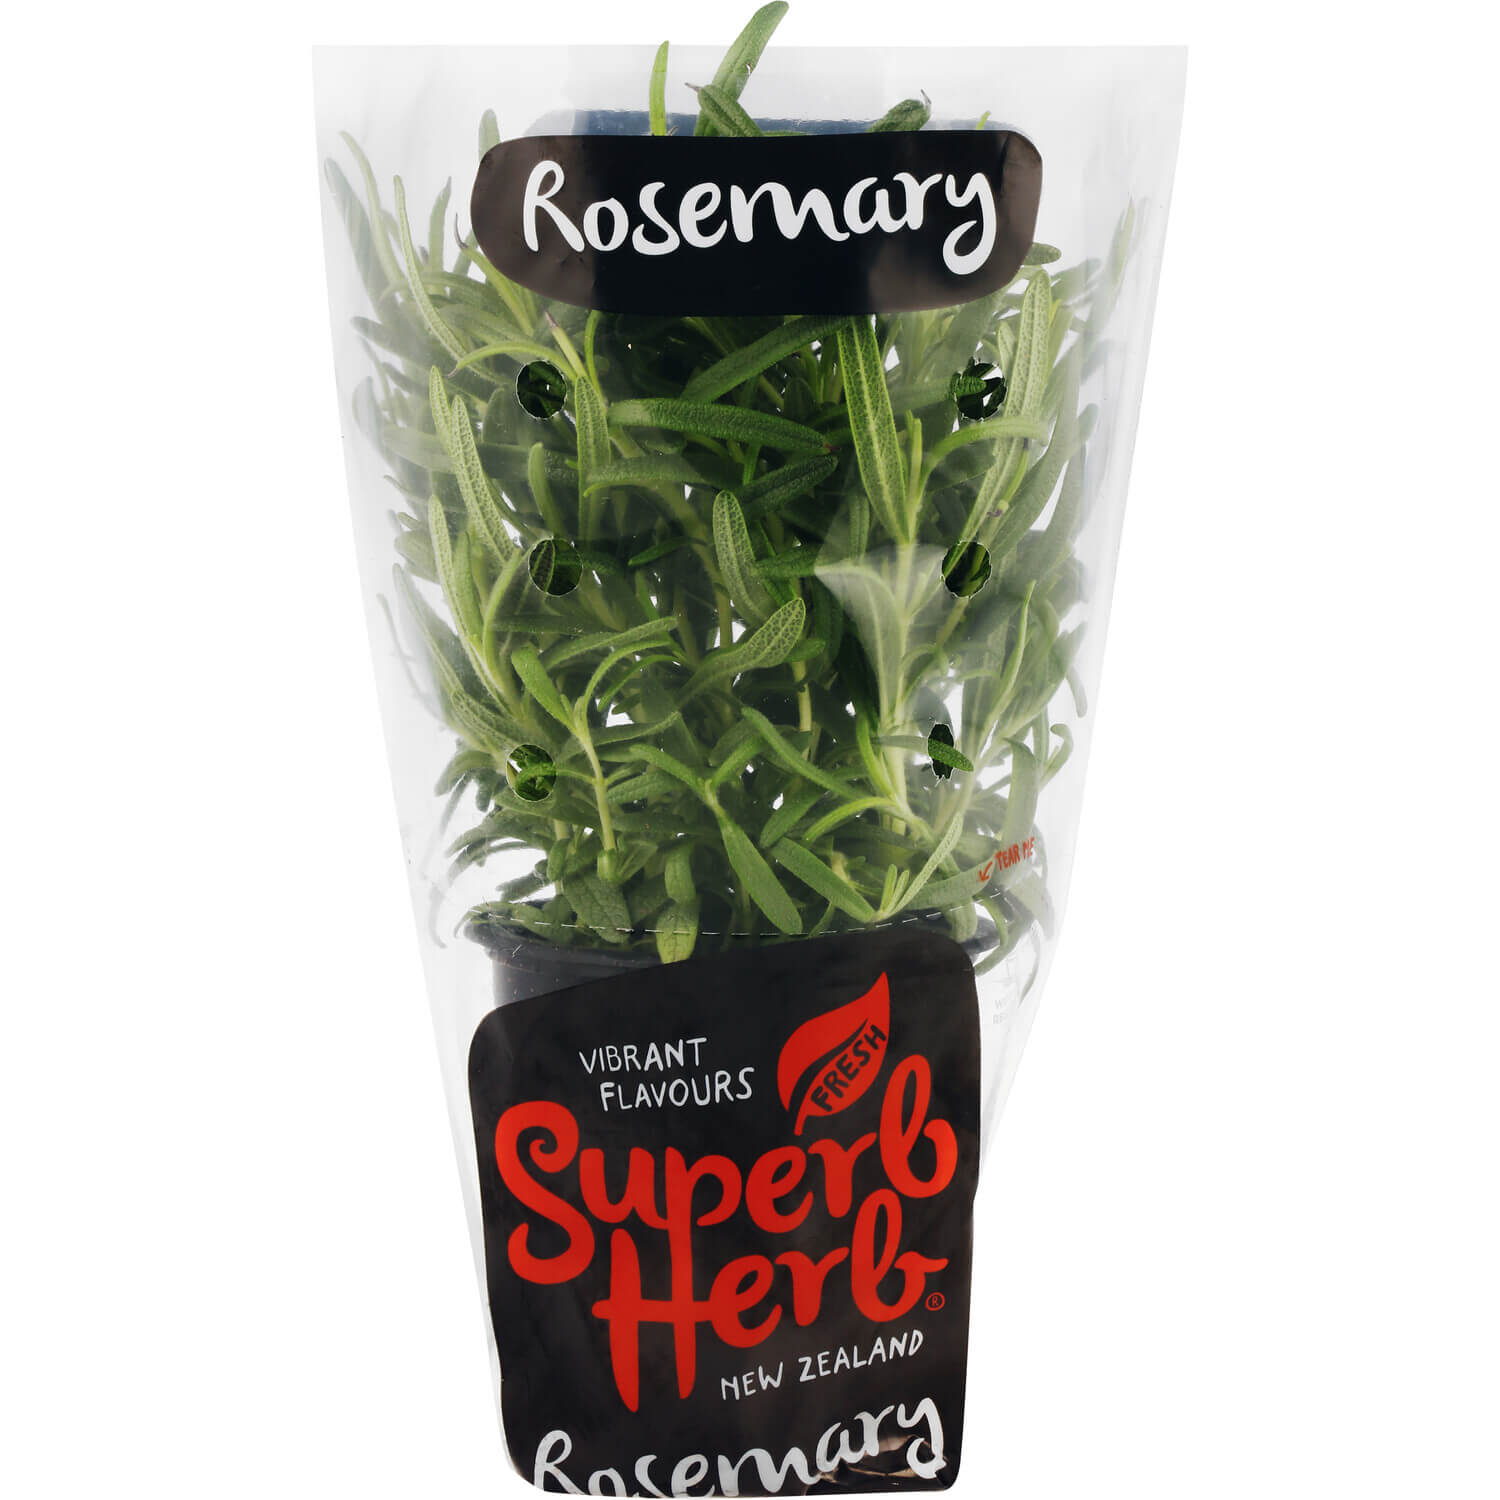 Superb Herb Rosemary - Pot